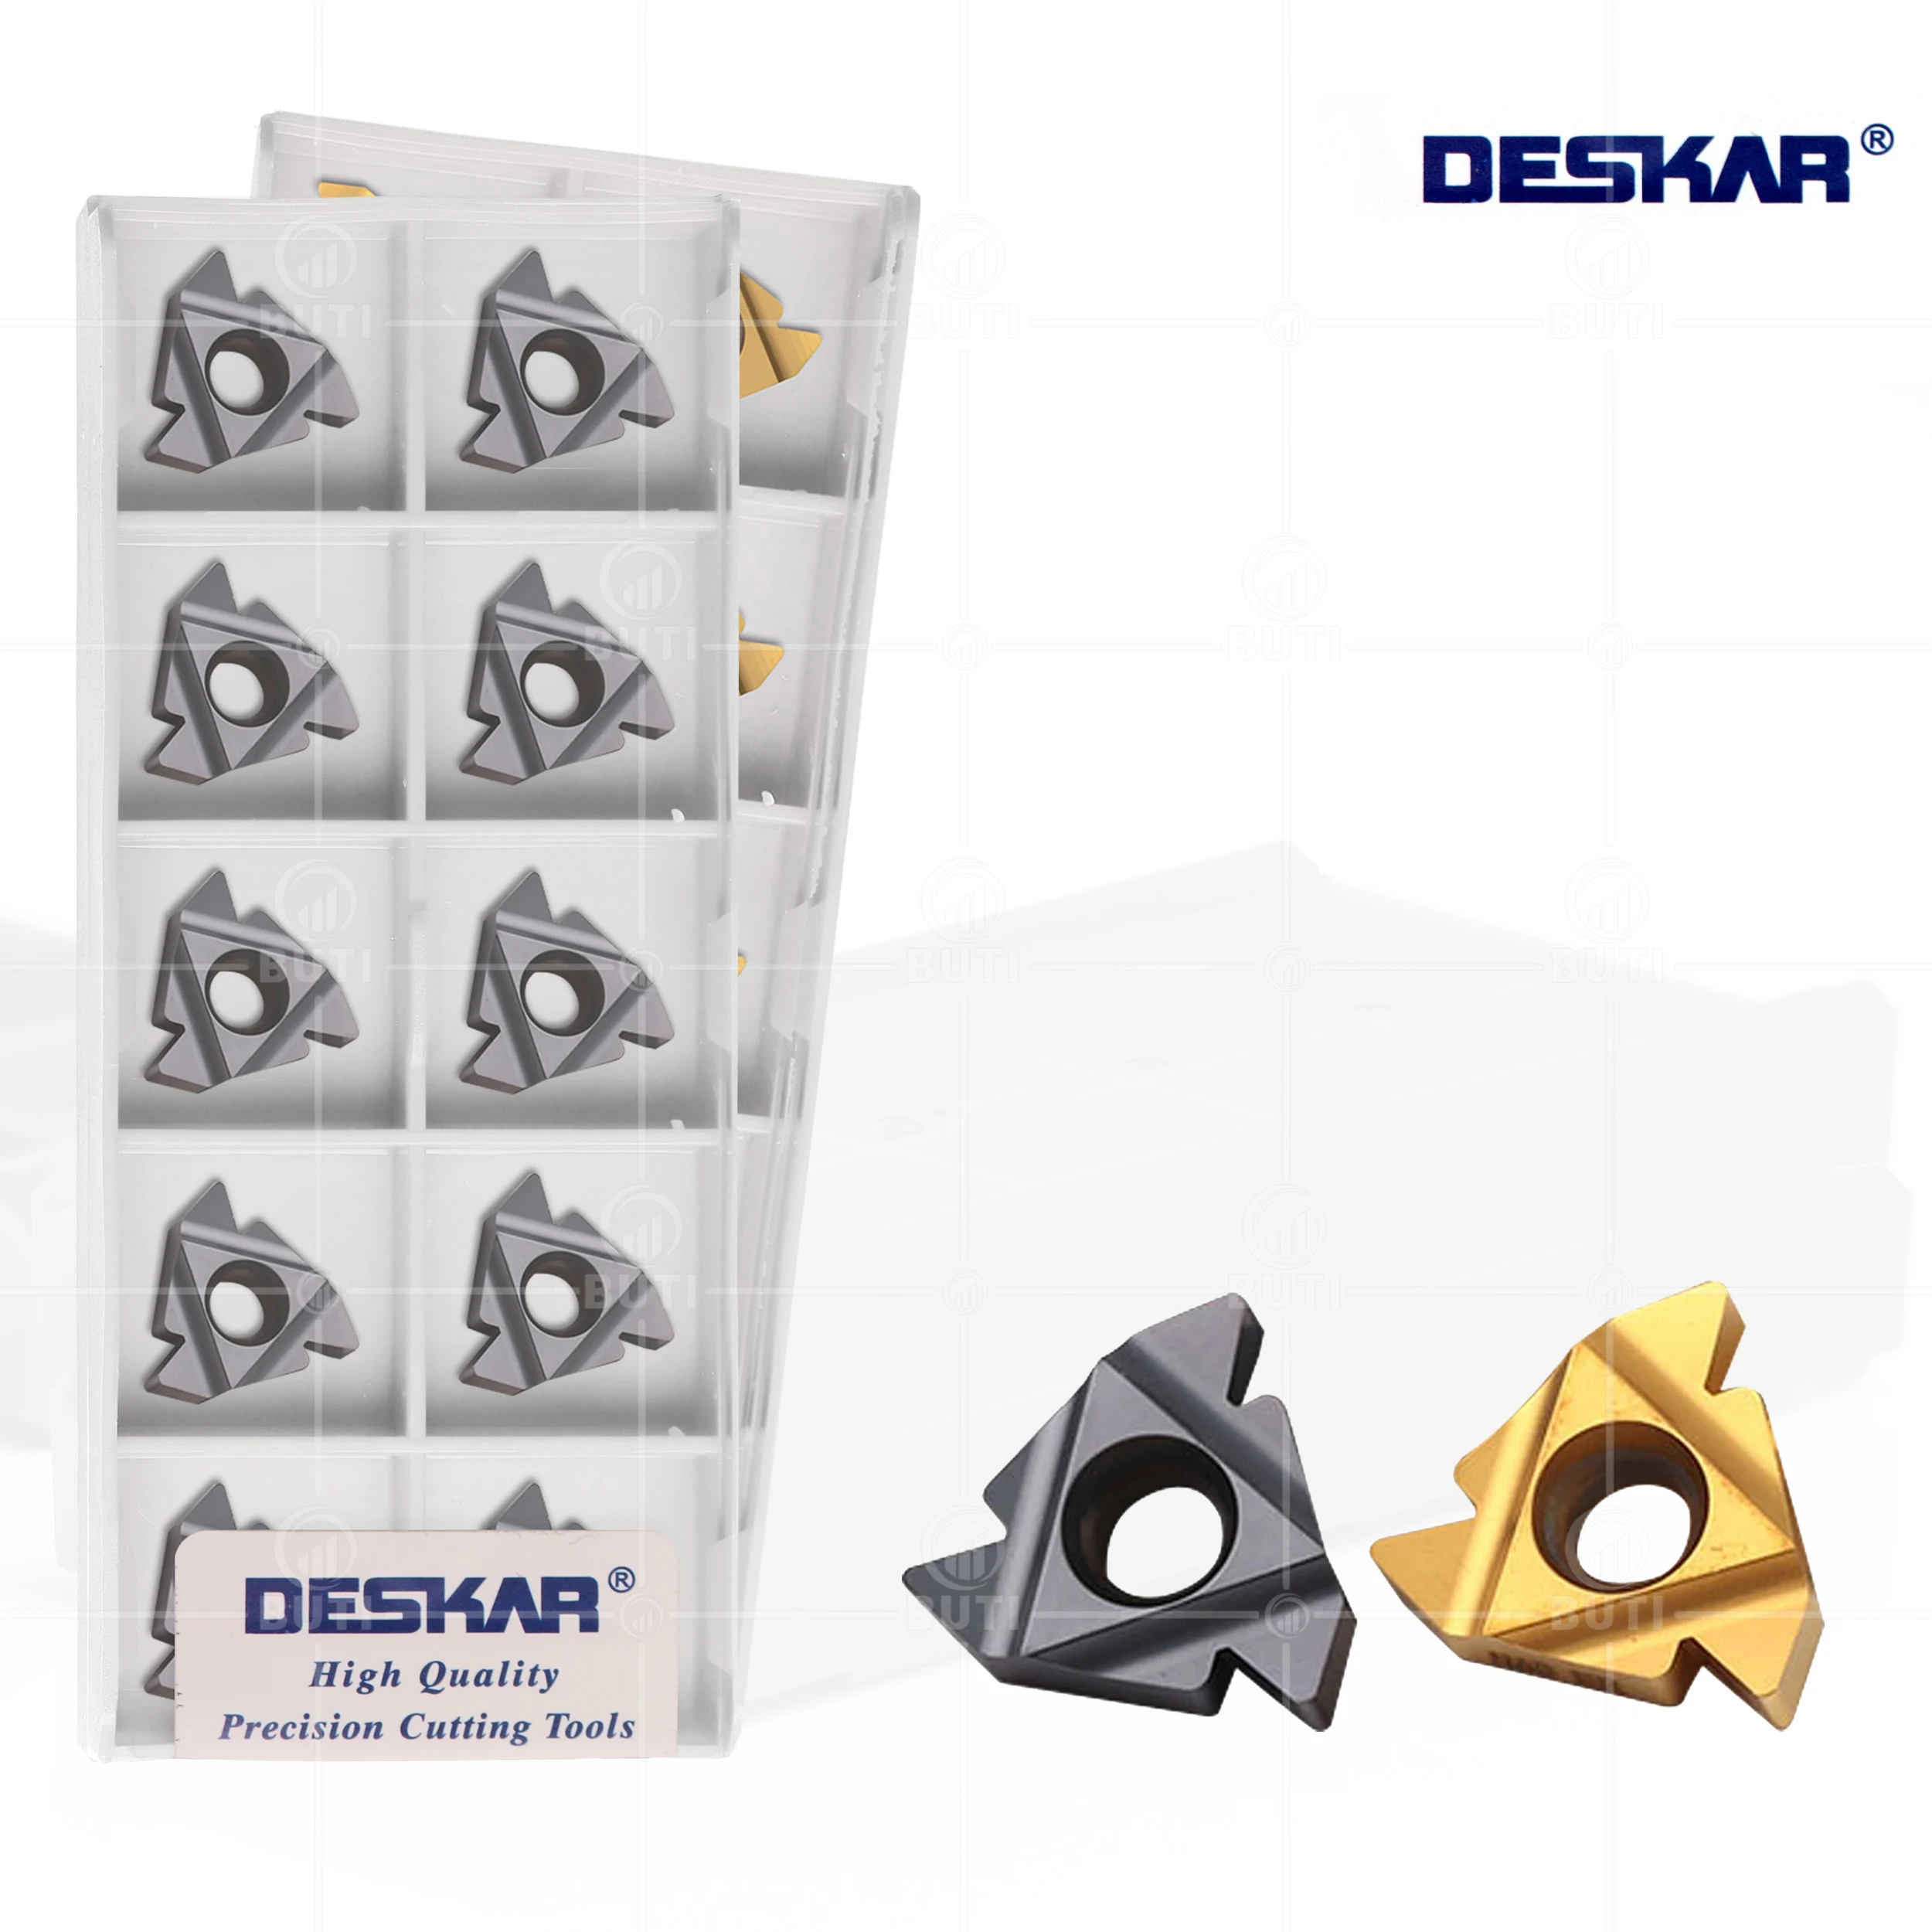 

DESKAR 100% Original 22ER 22IR N55 N60 LDA LDC CNC Lathes Threading Turning Tools Carbide Inserts For Steel And Stainless Steel